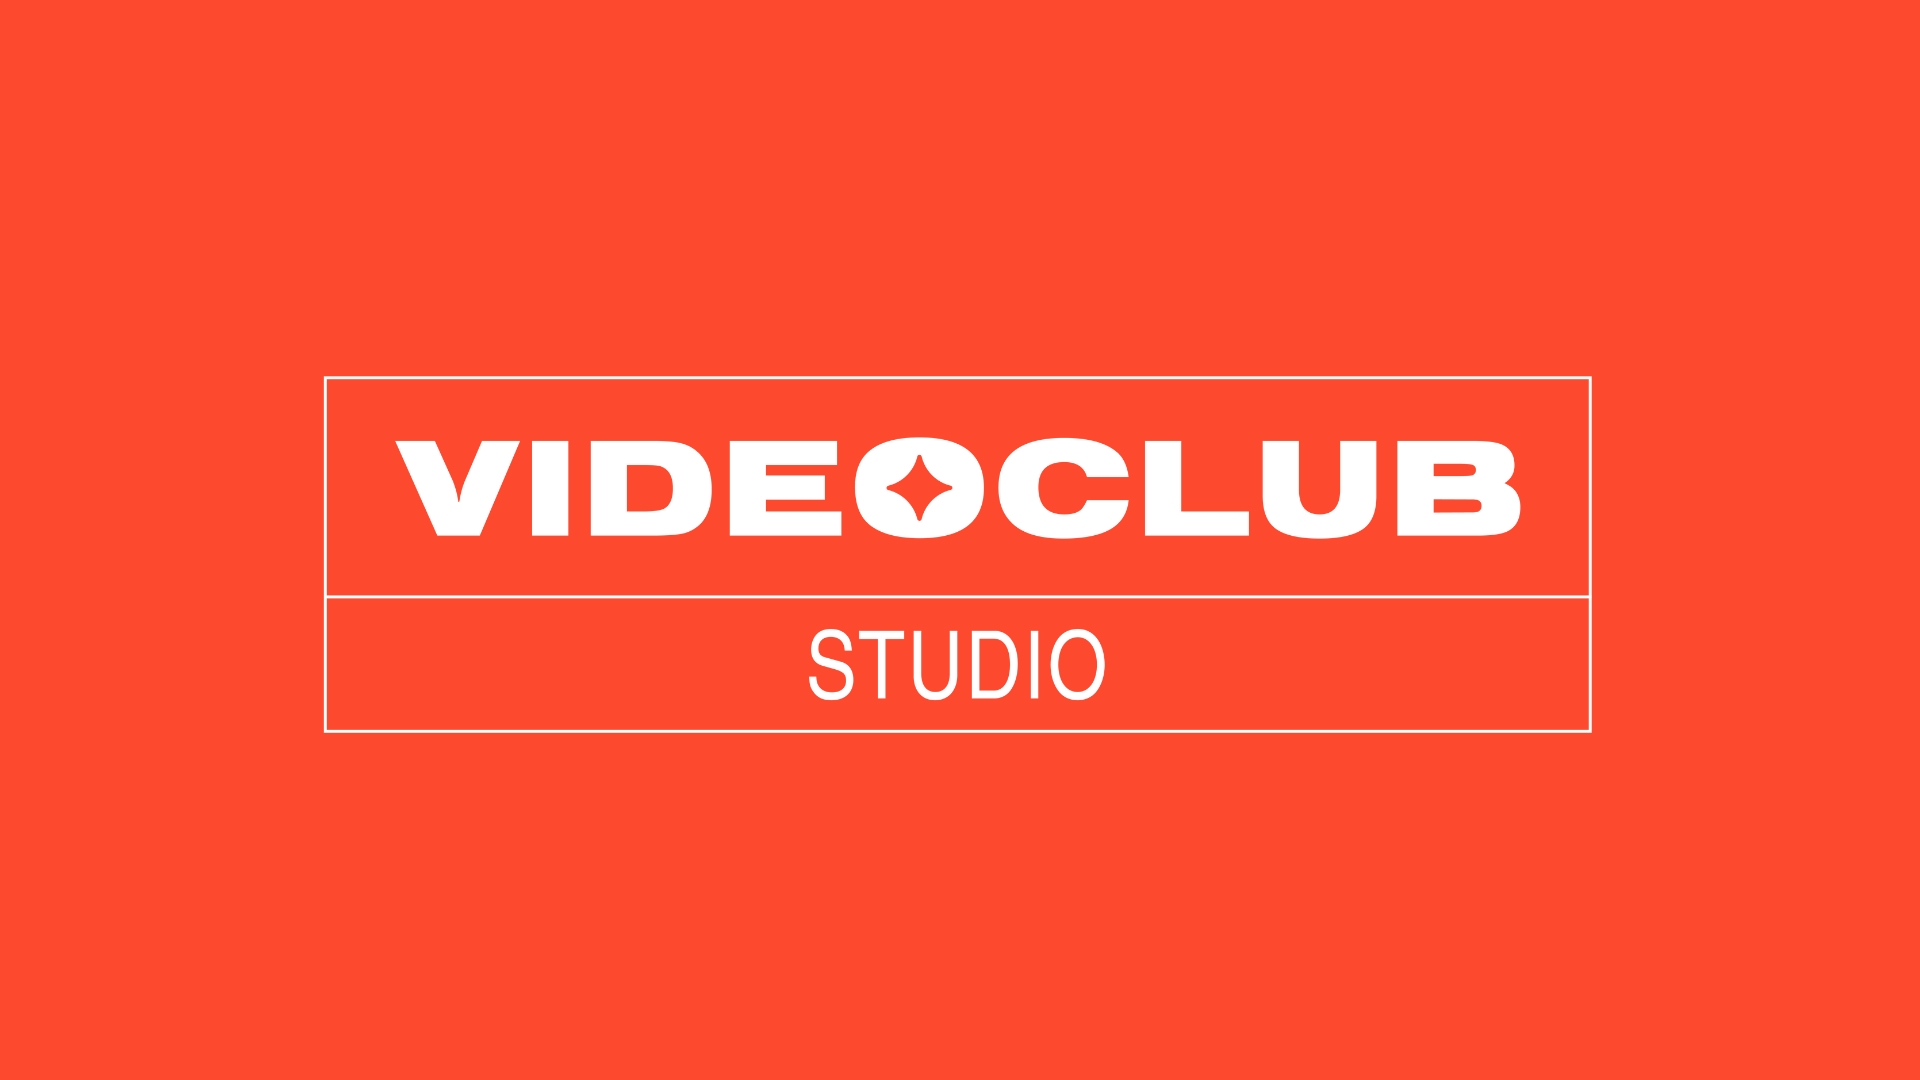 Studio | VideoClub Studio